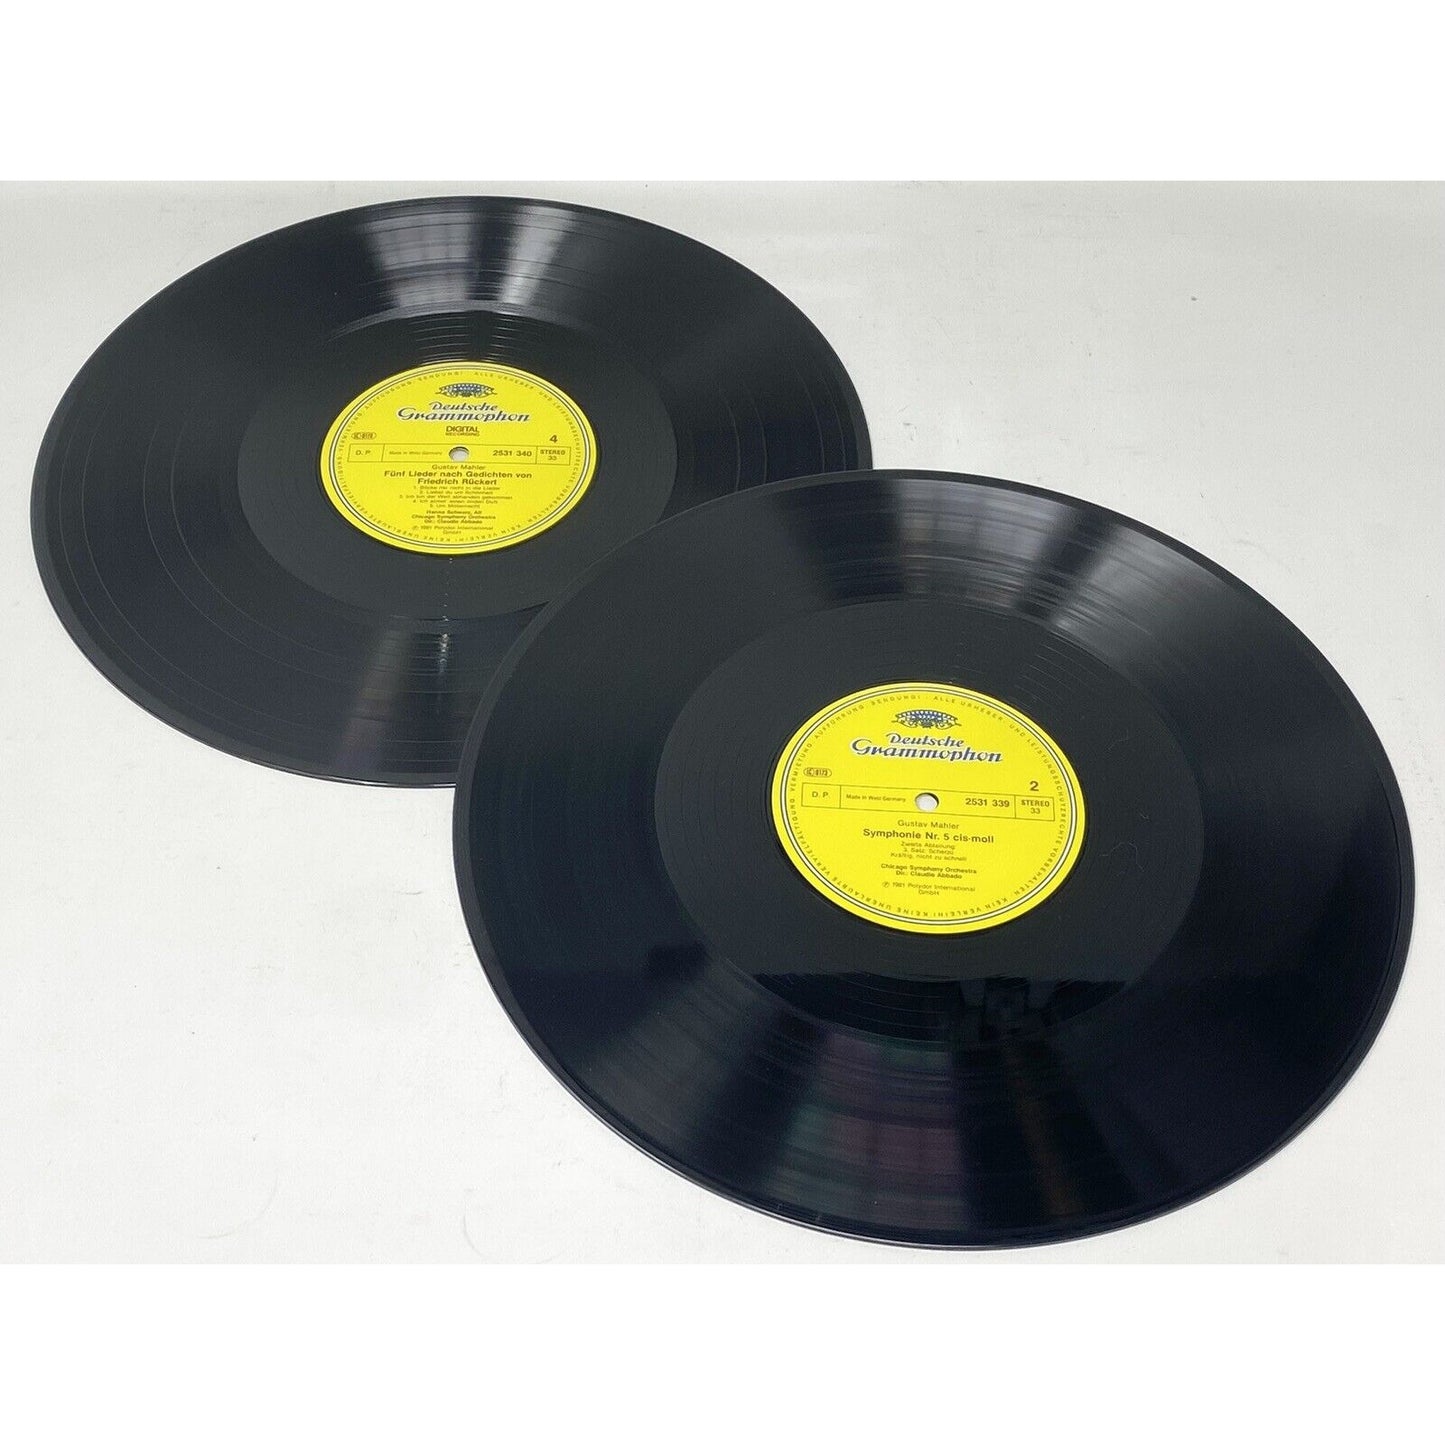 Gustav Mahler Chicago Symphony No. 5 / Rückert-Lieder Vinyl 12" x2 LP